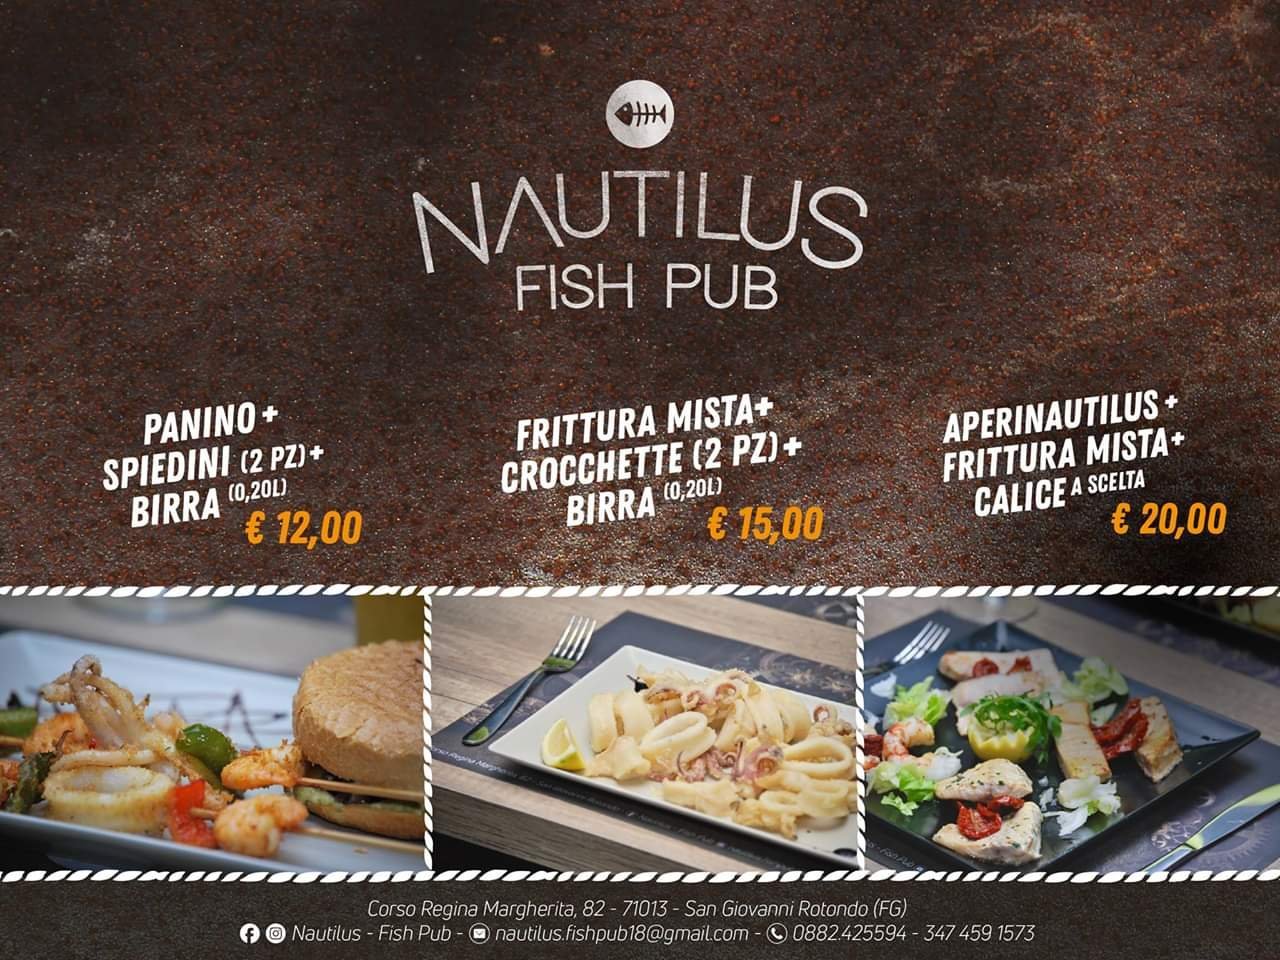 Nautilus Fish Pub, San Giovanni Rotondo